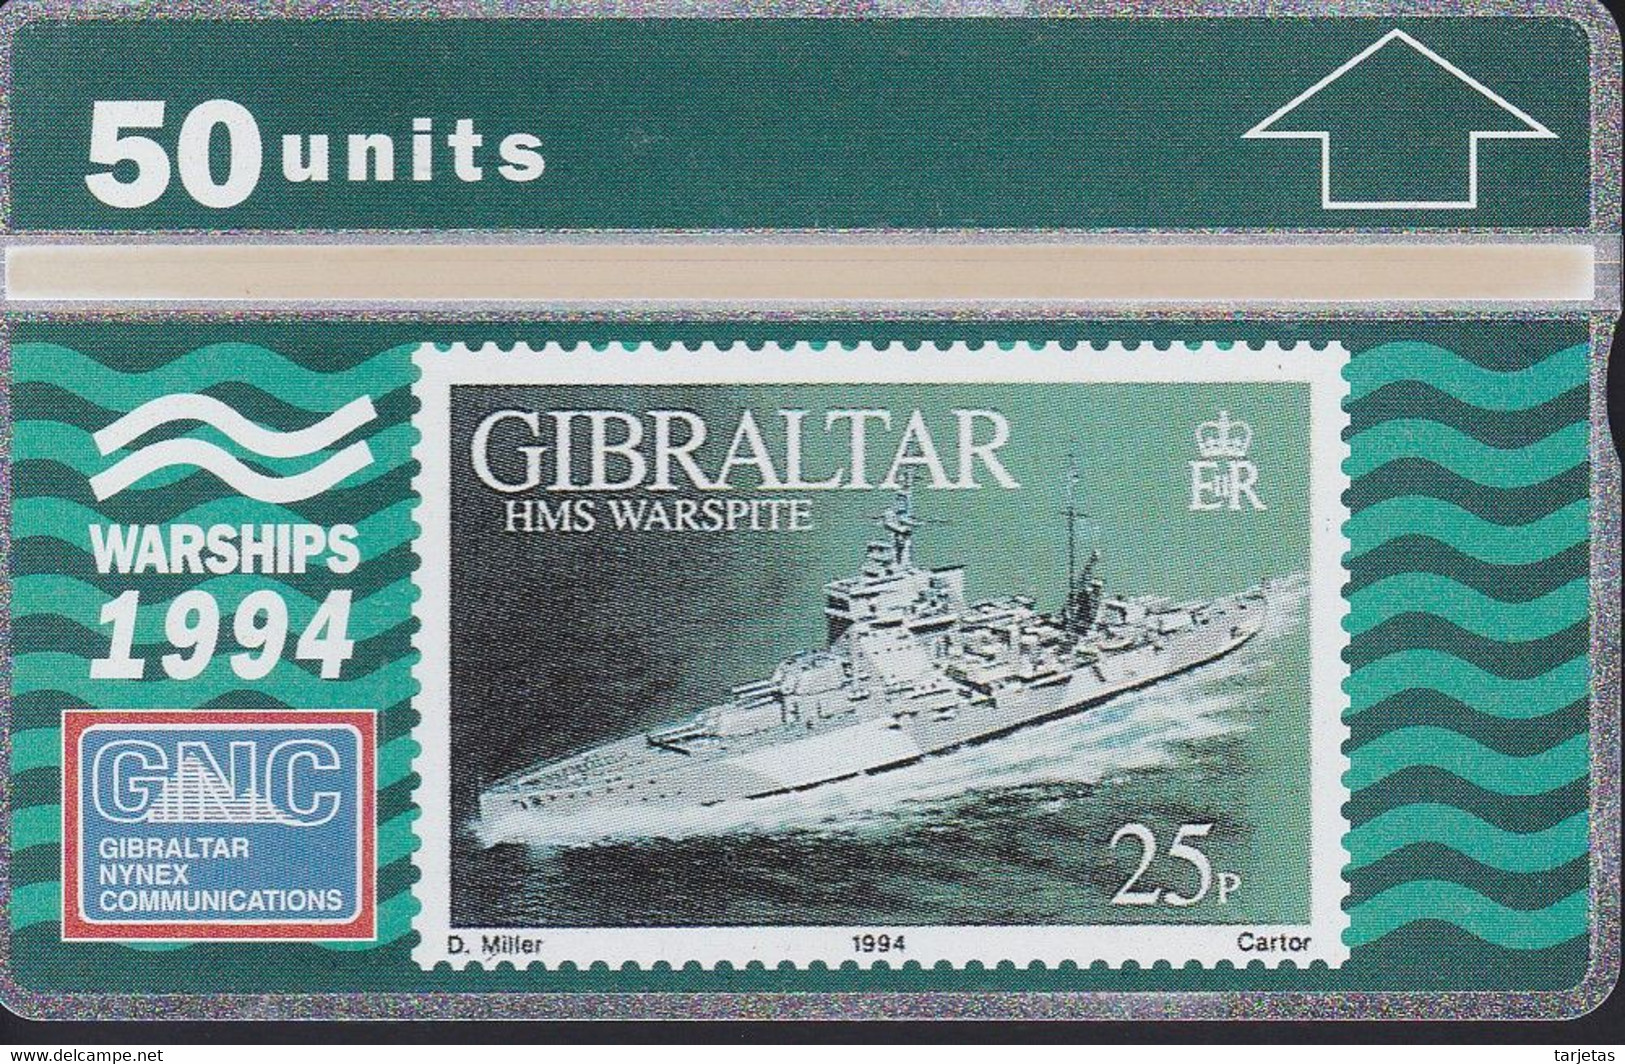 Nº 28 TARJETA DE GIBRALTAR DEL BARCO HMS WARSPITE (409A)  (NUEVA-MINT) SELLO-STAMP - Gibraltar